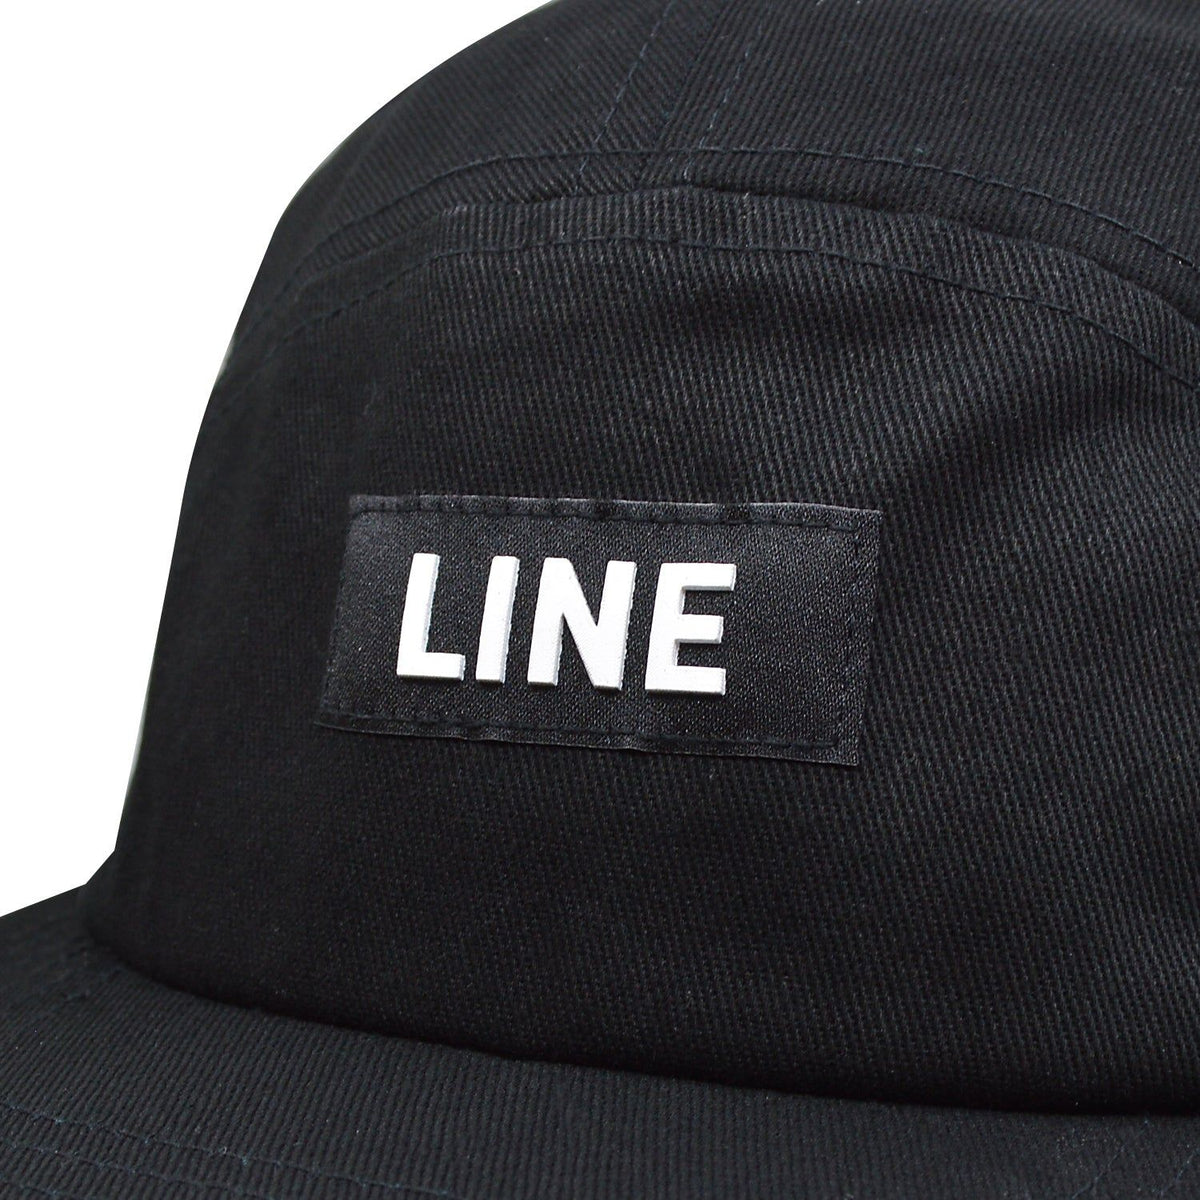 Line Forever 5-Panel Hat